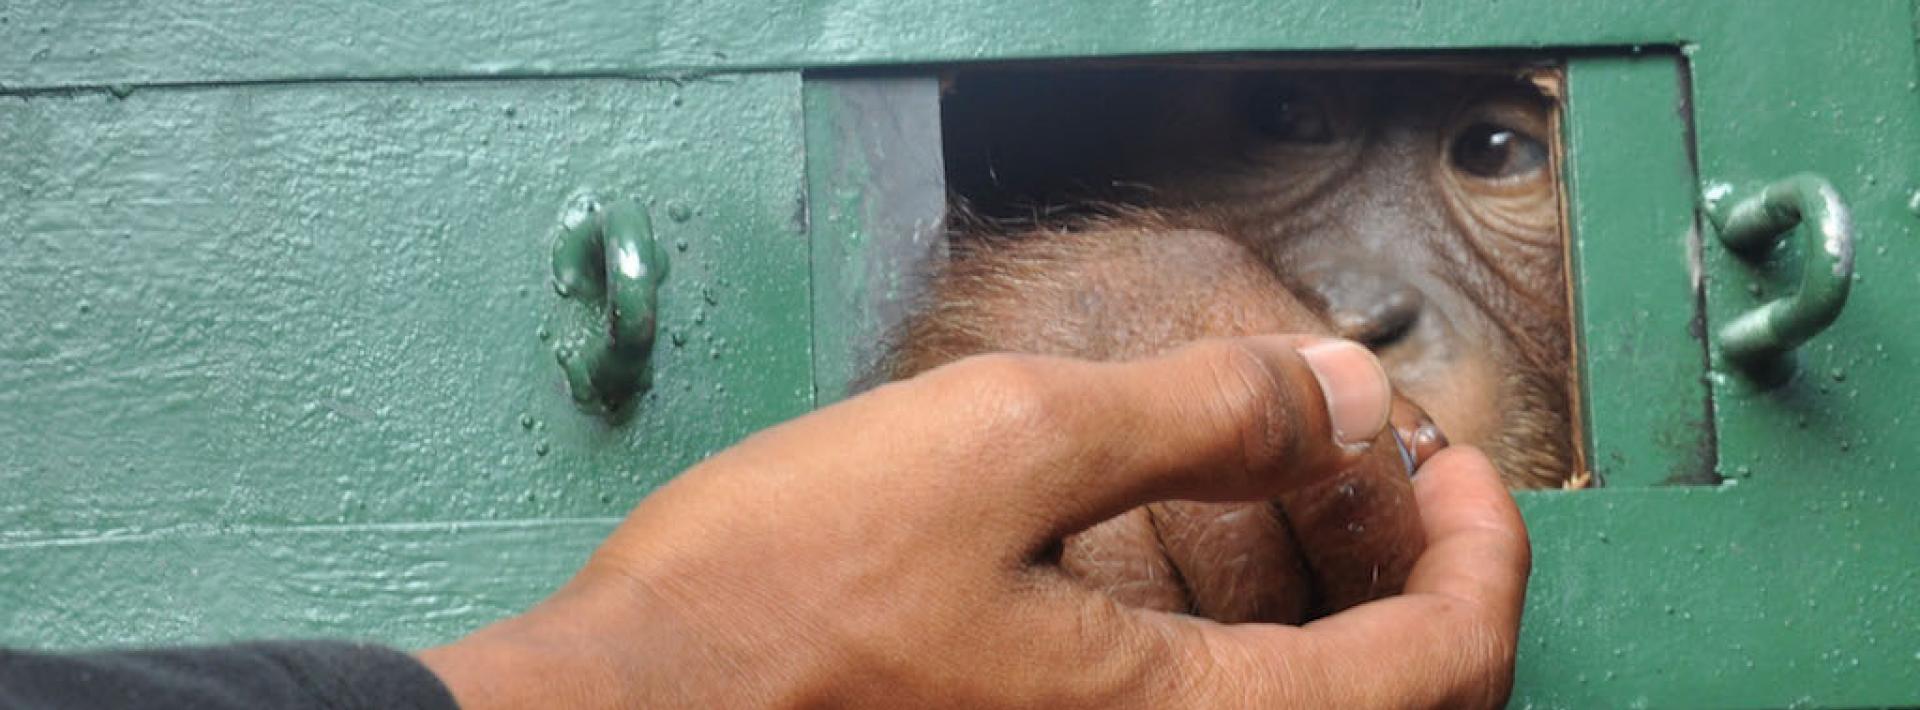 Smuggled orangutan